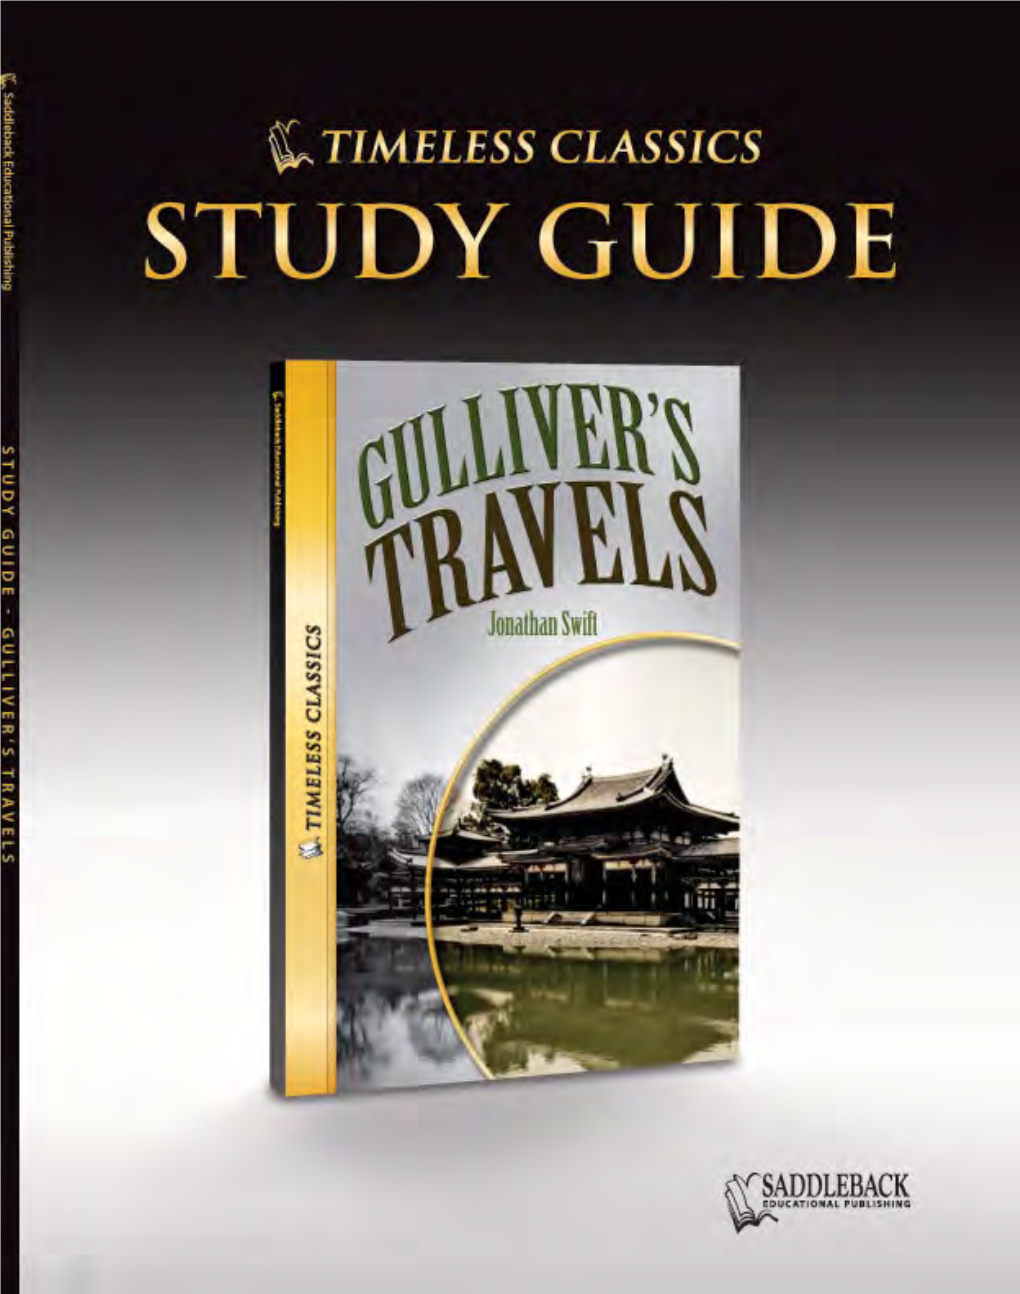 SG-Gullivers Travels 00-13.Indd